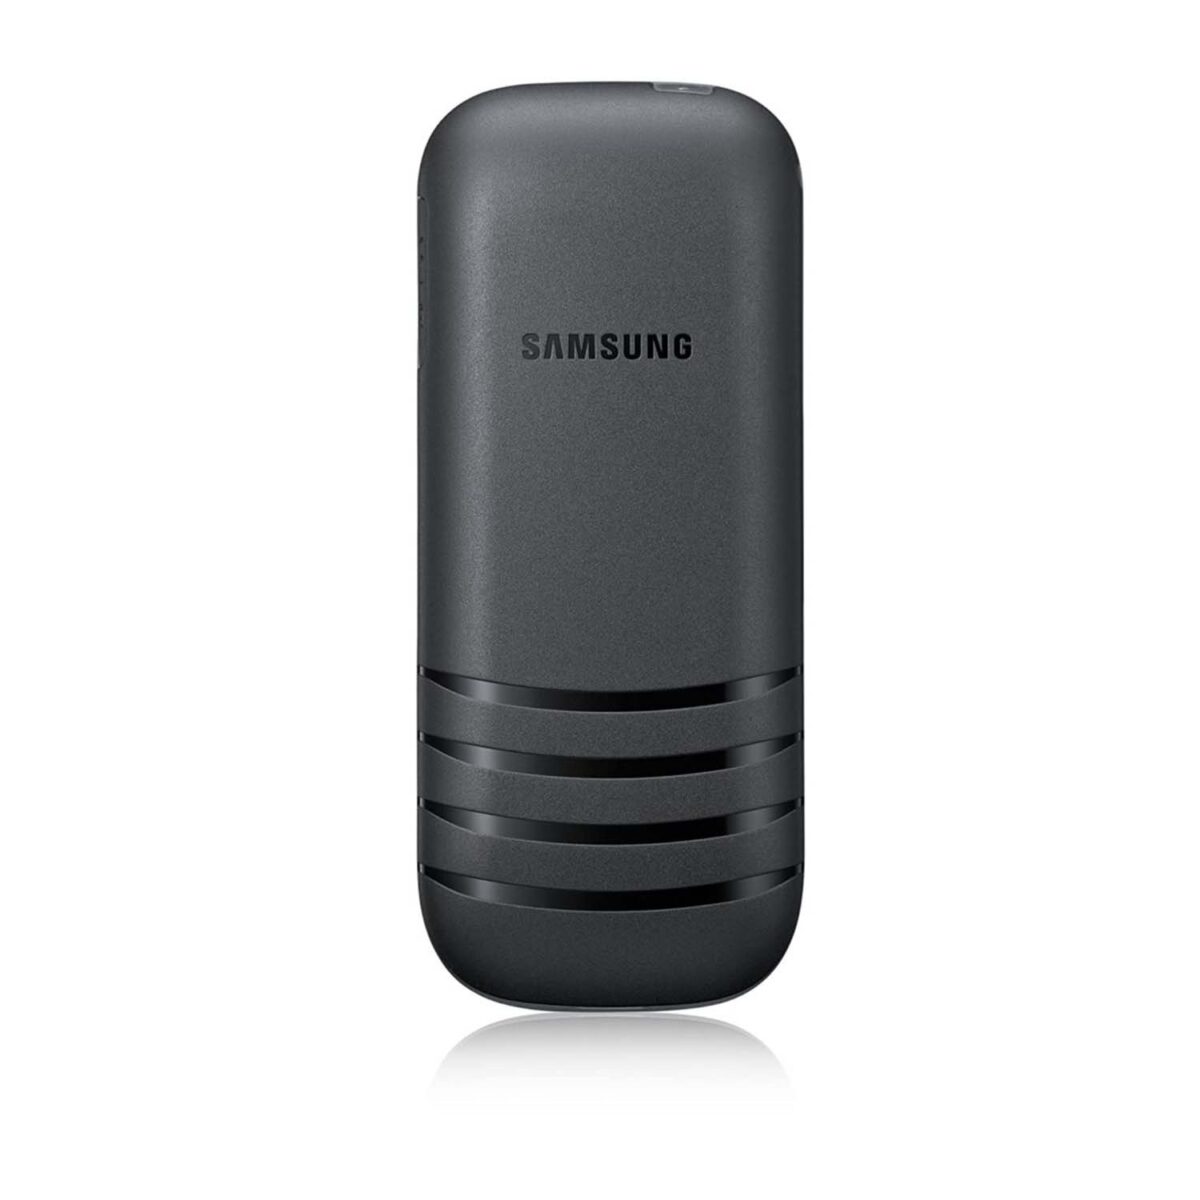 Samsung-Guru-1200